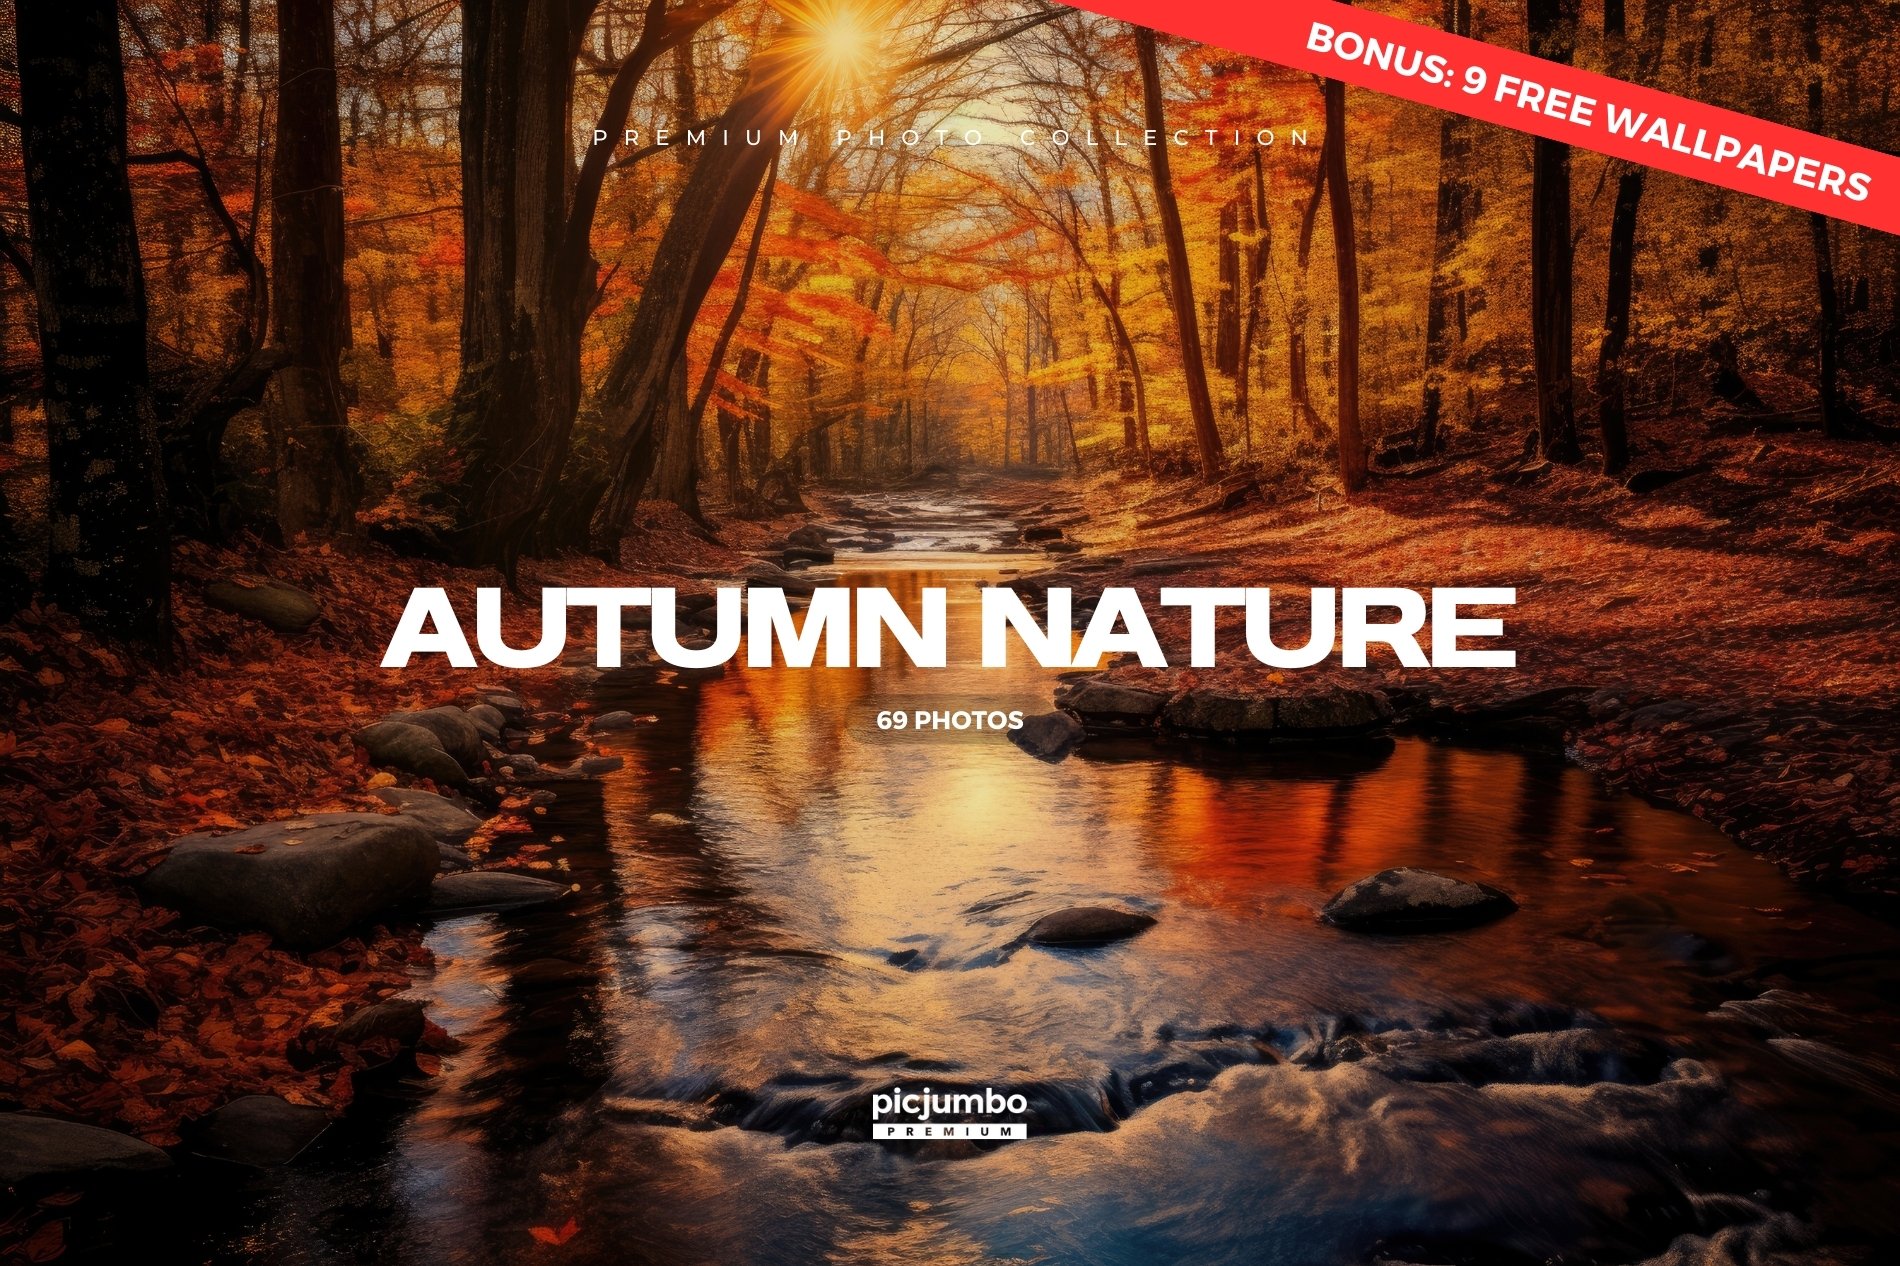 Autumn Nature Stock Photo Collection